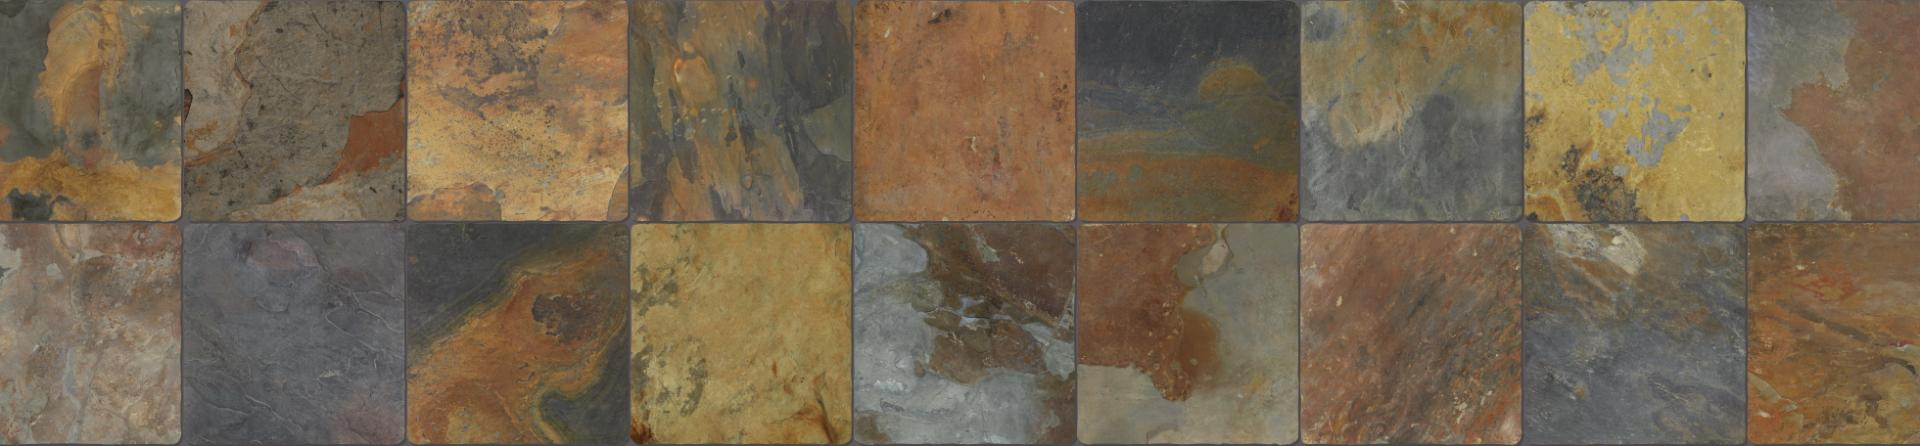 carrelage-sol-ermes-flagstone-30x50-1-05m2-paq-multico-37178-1